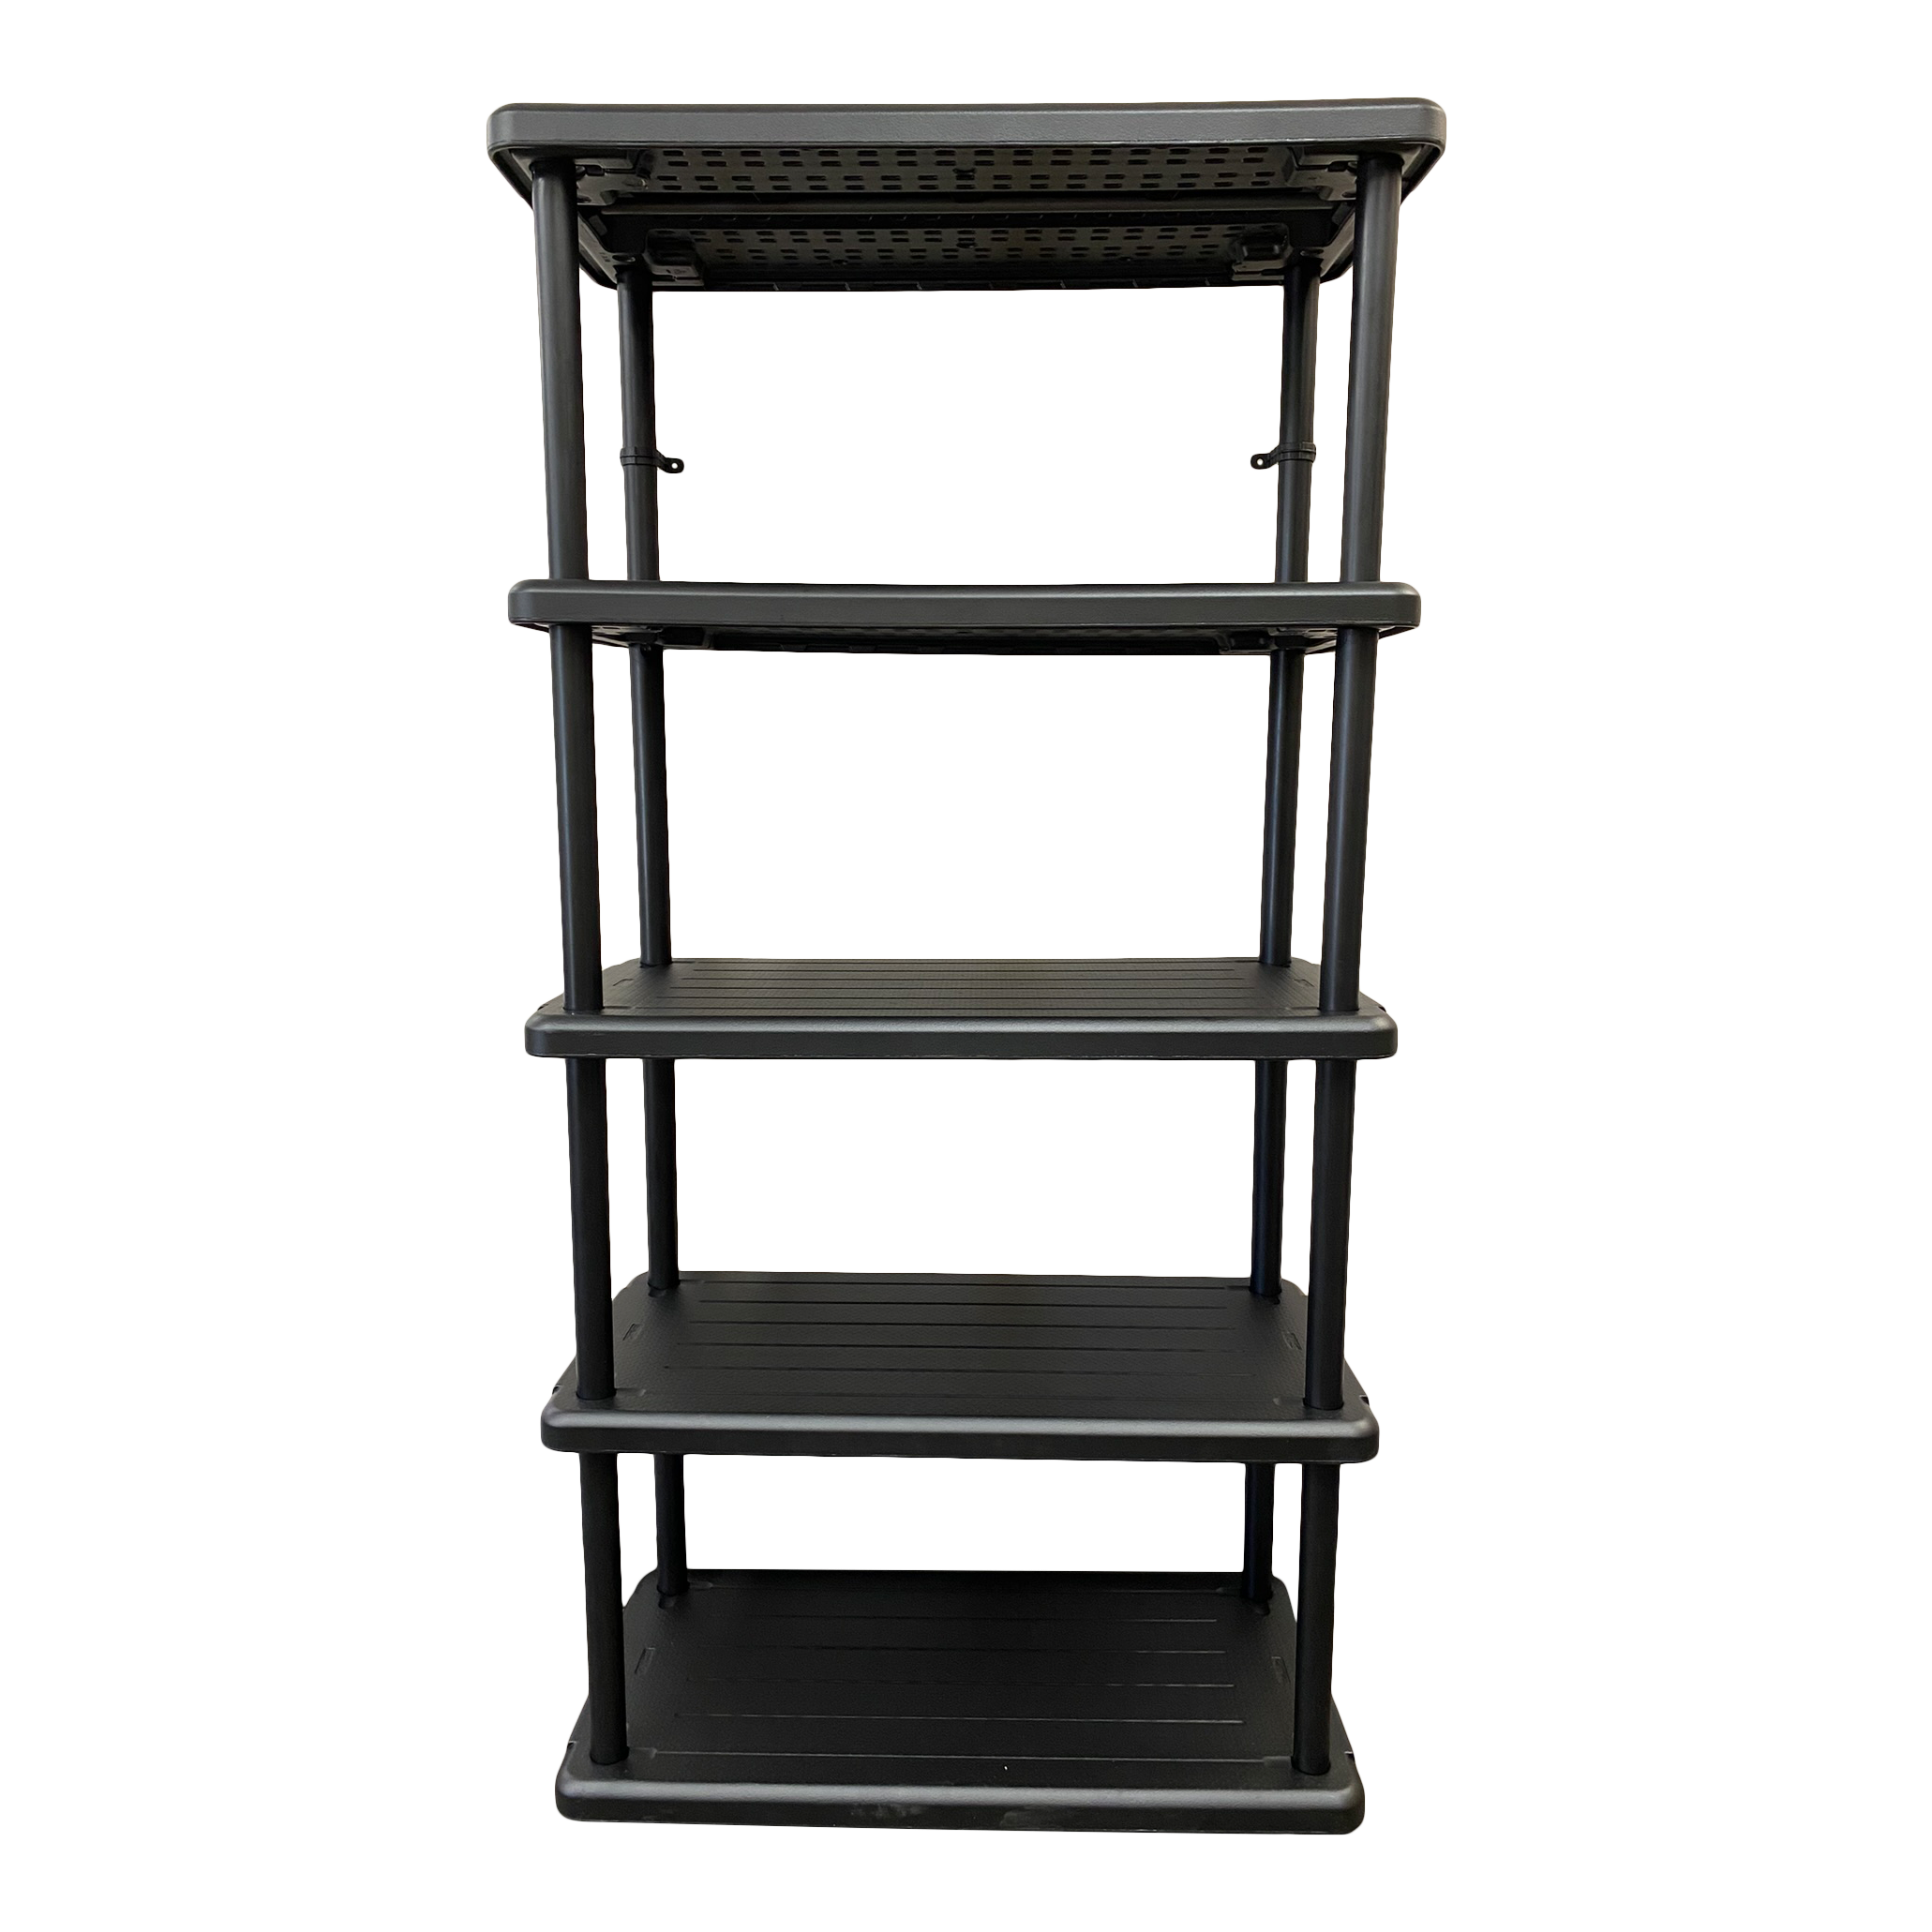 A black five-shelf open storage unit.